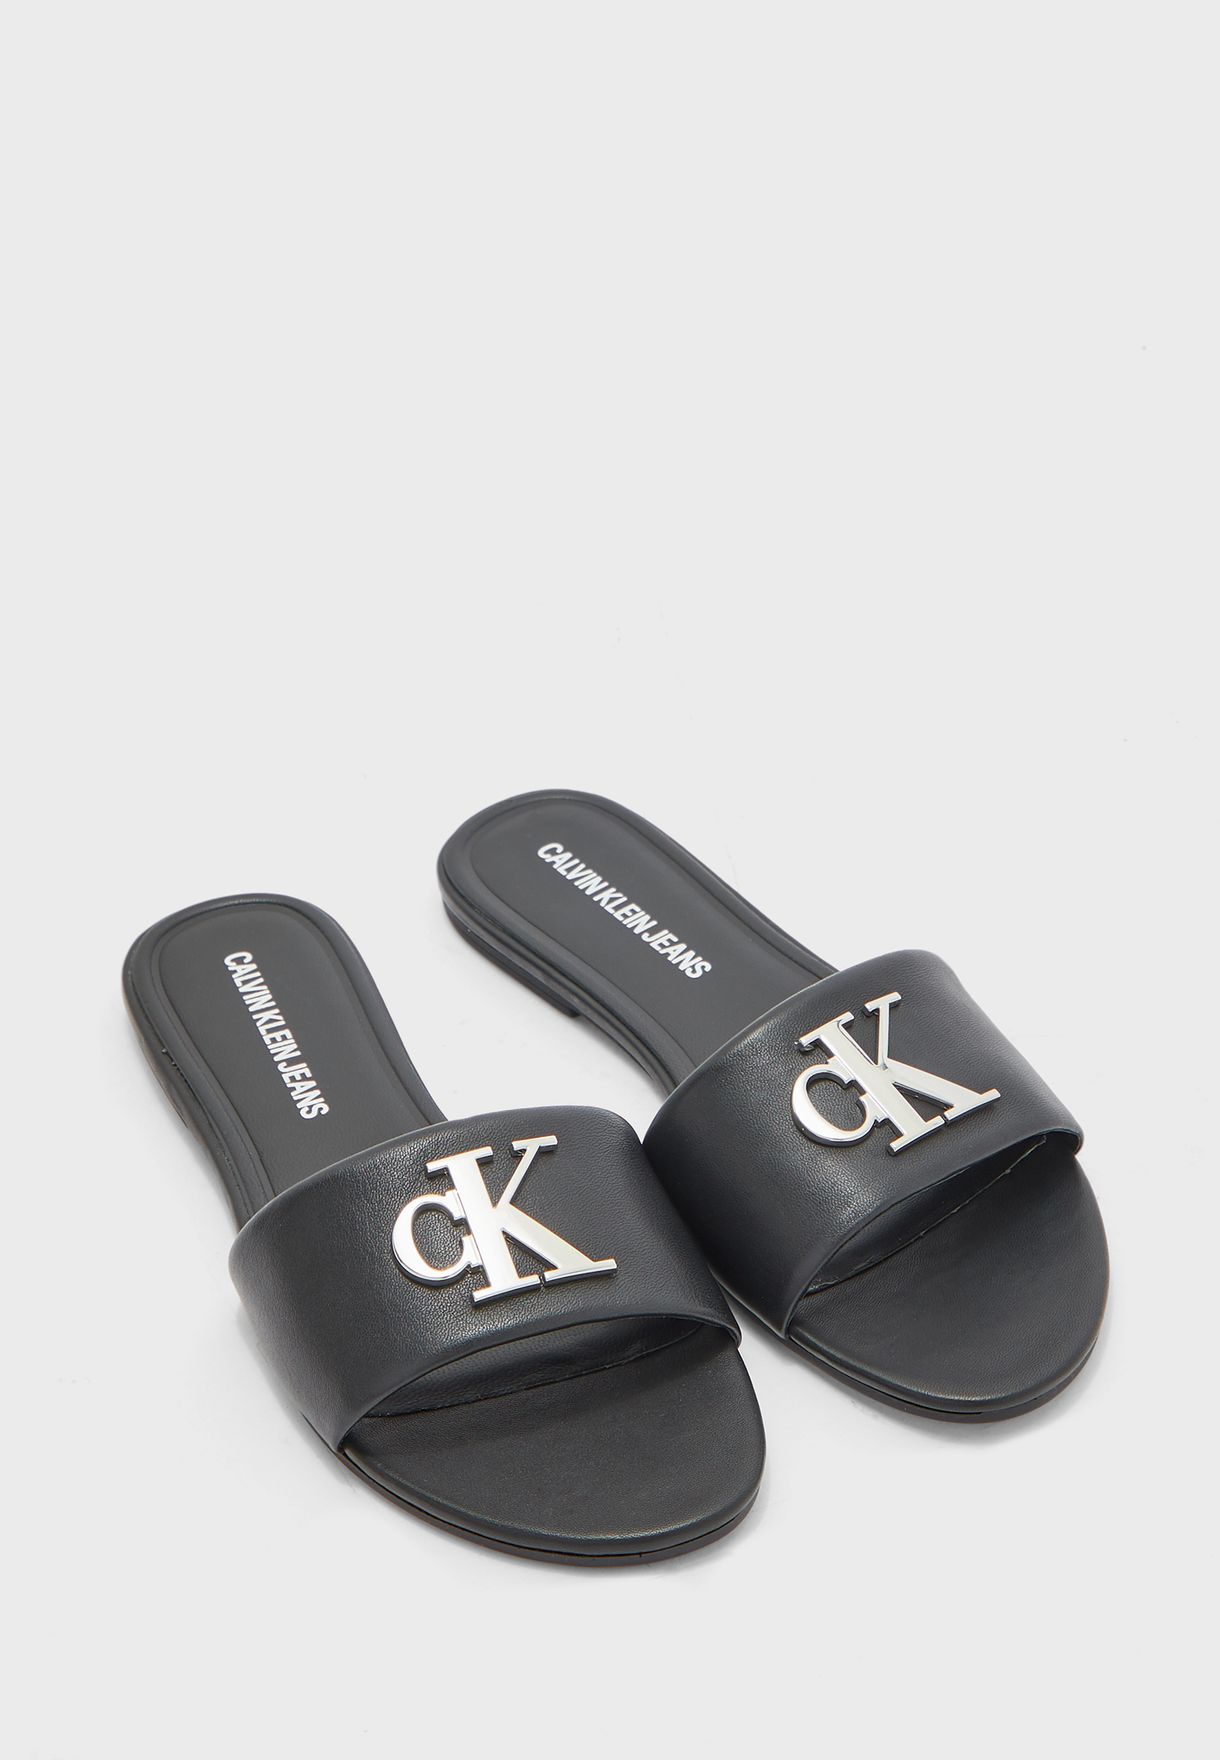 Actualizar 70+ imagen calvin klein leather sandals - Giaoduchtn.edu.vn